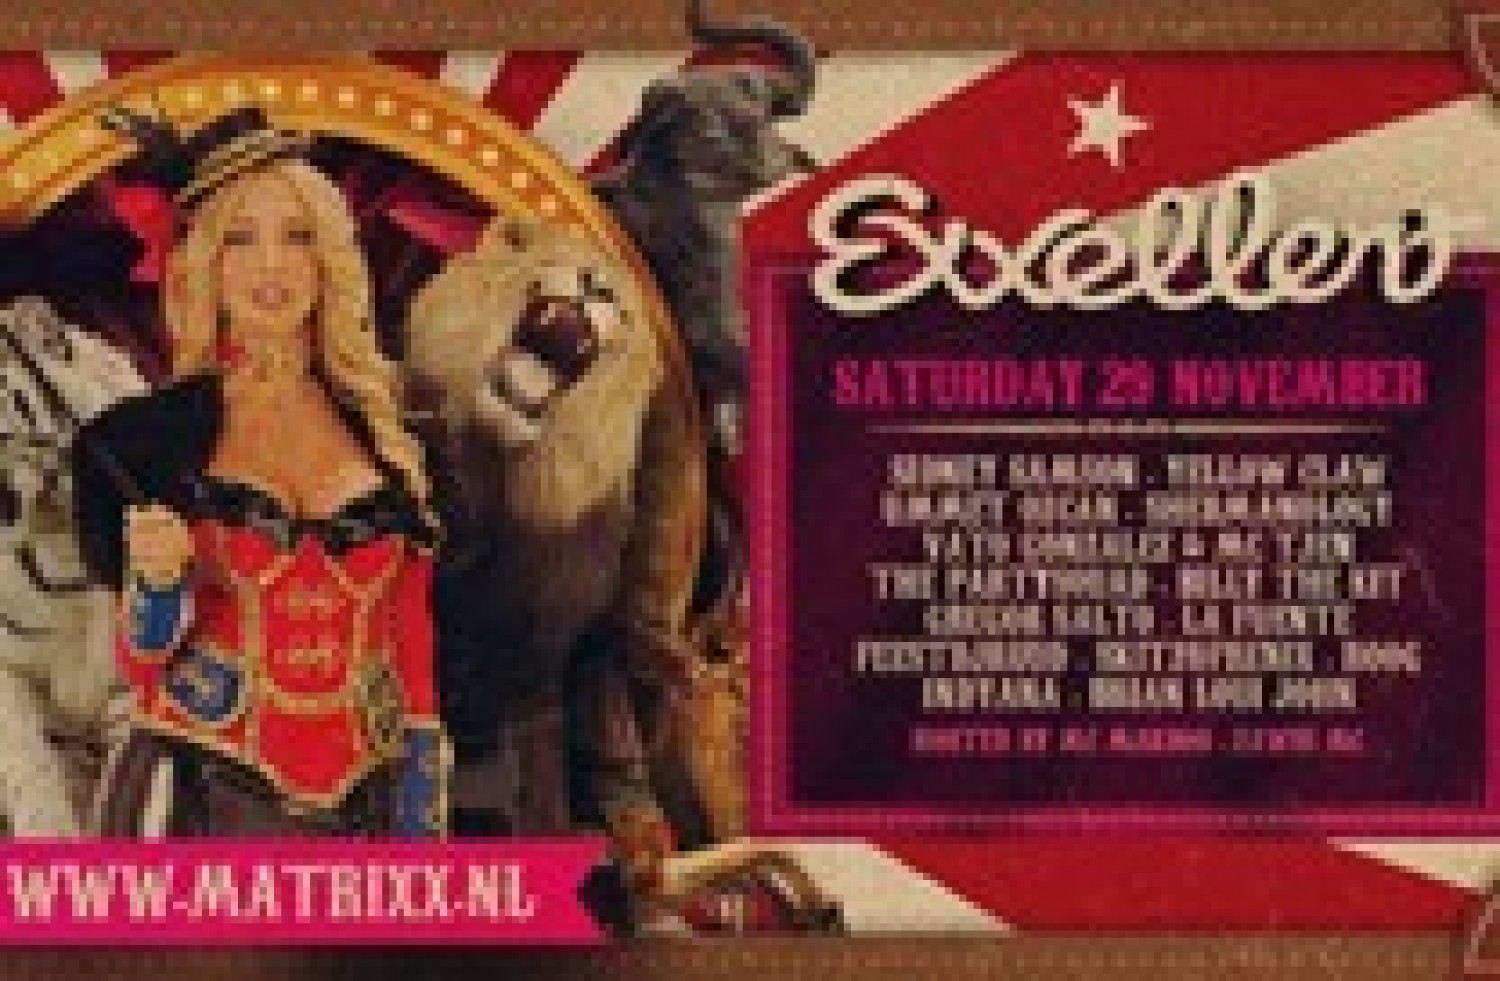 Party report: Exxellent, Nijmegen (29-11-2014)